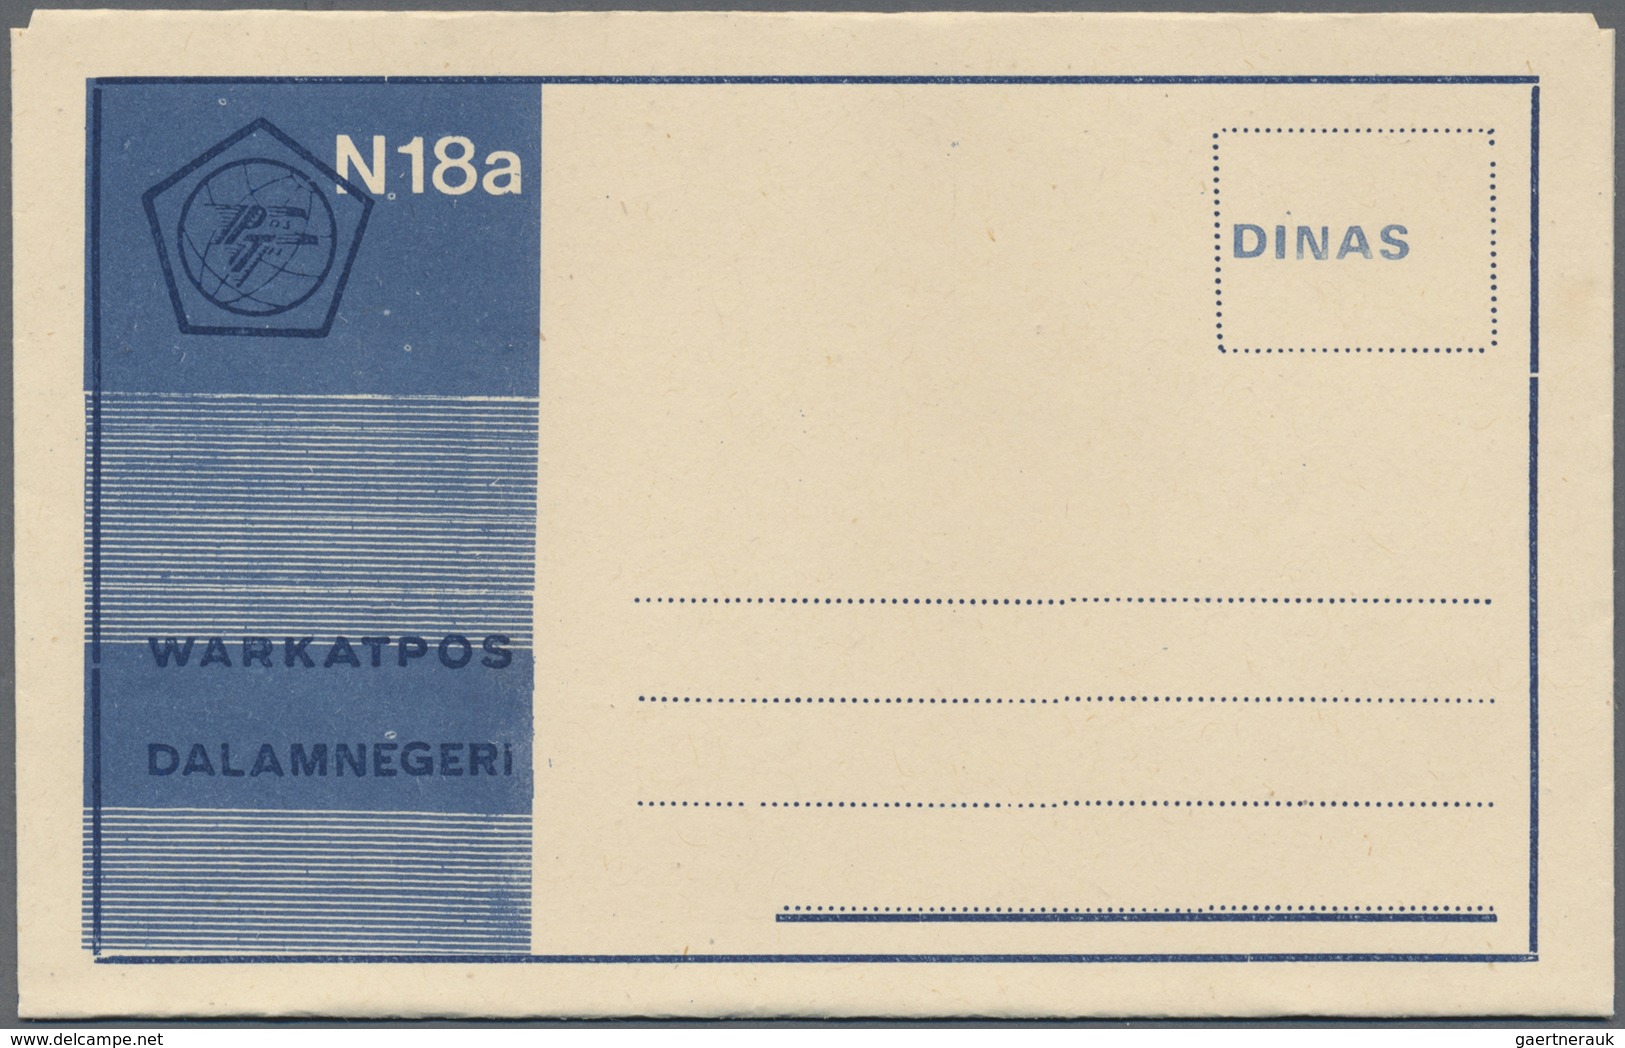 GA Indonesien: 1950/76, military / UN peacekeeping / govt. service special envelopes collection: Milita